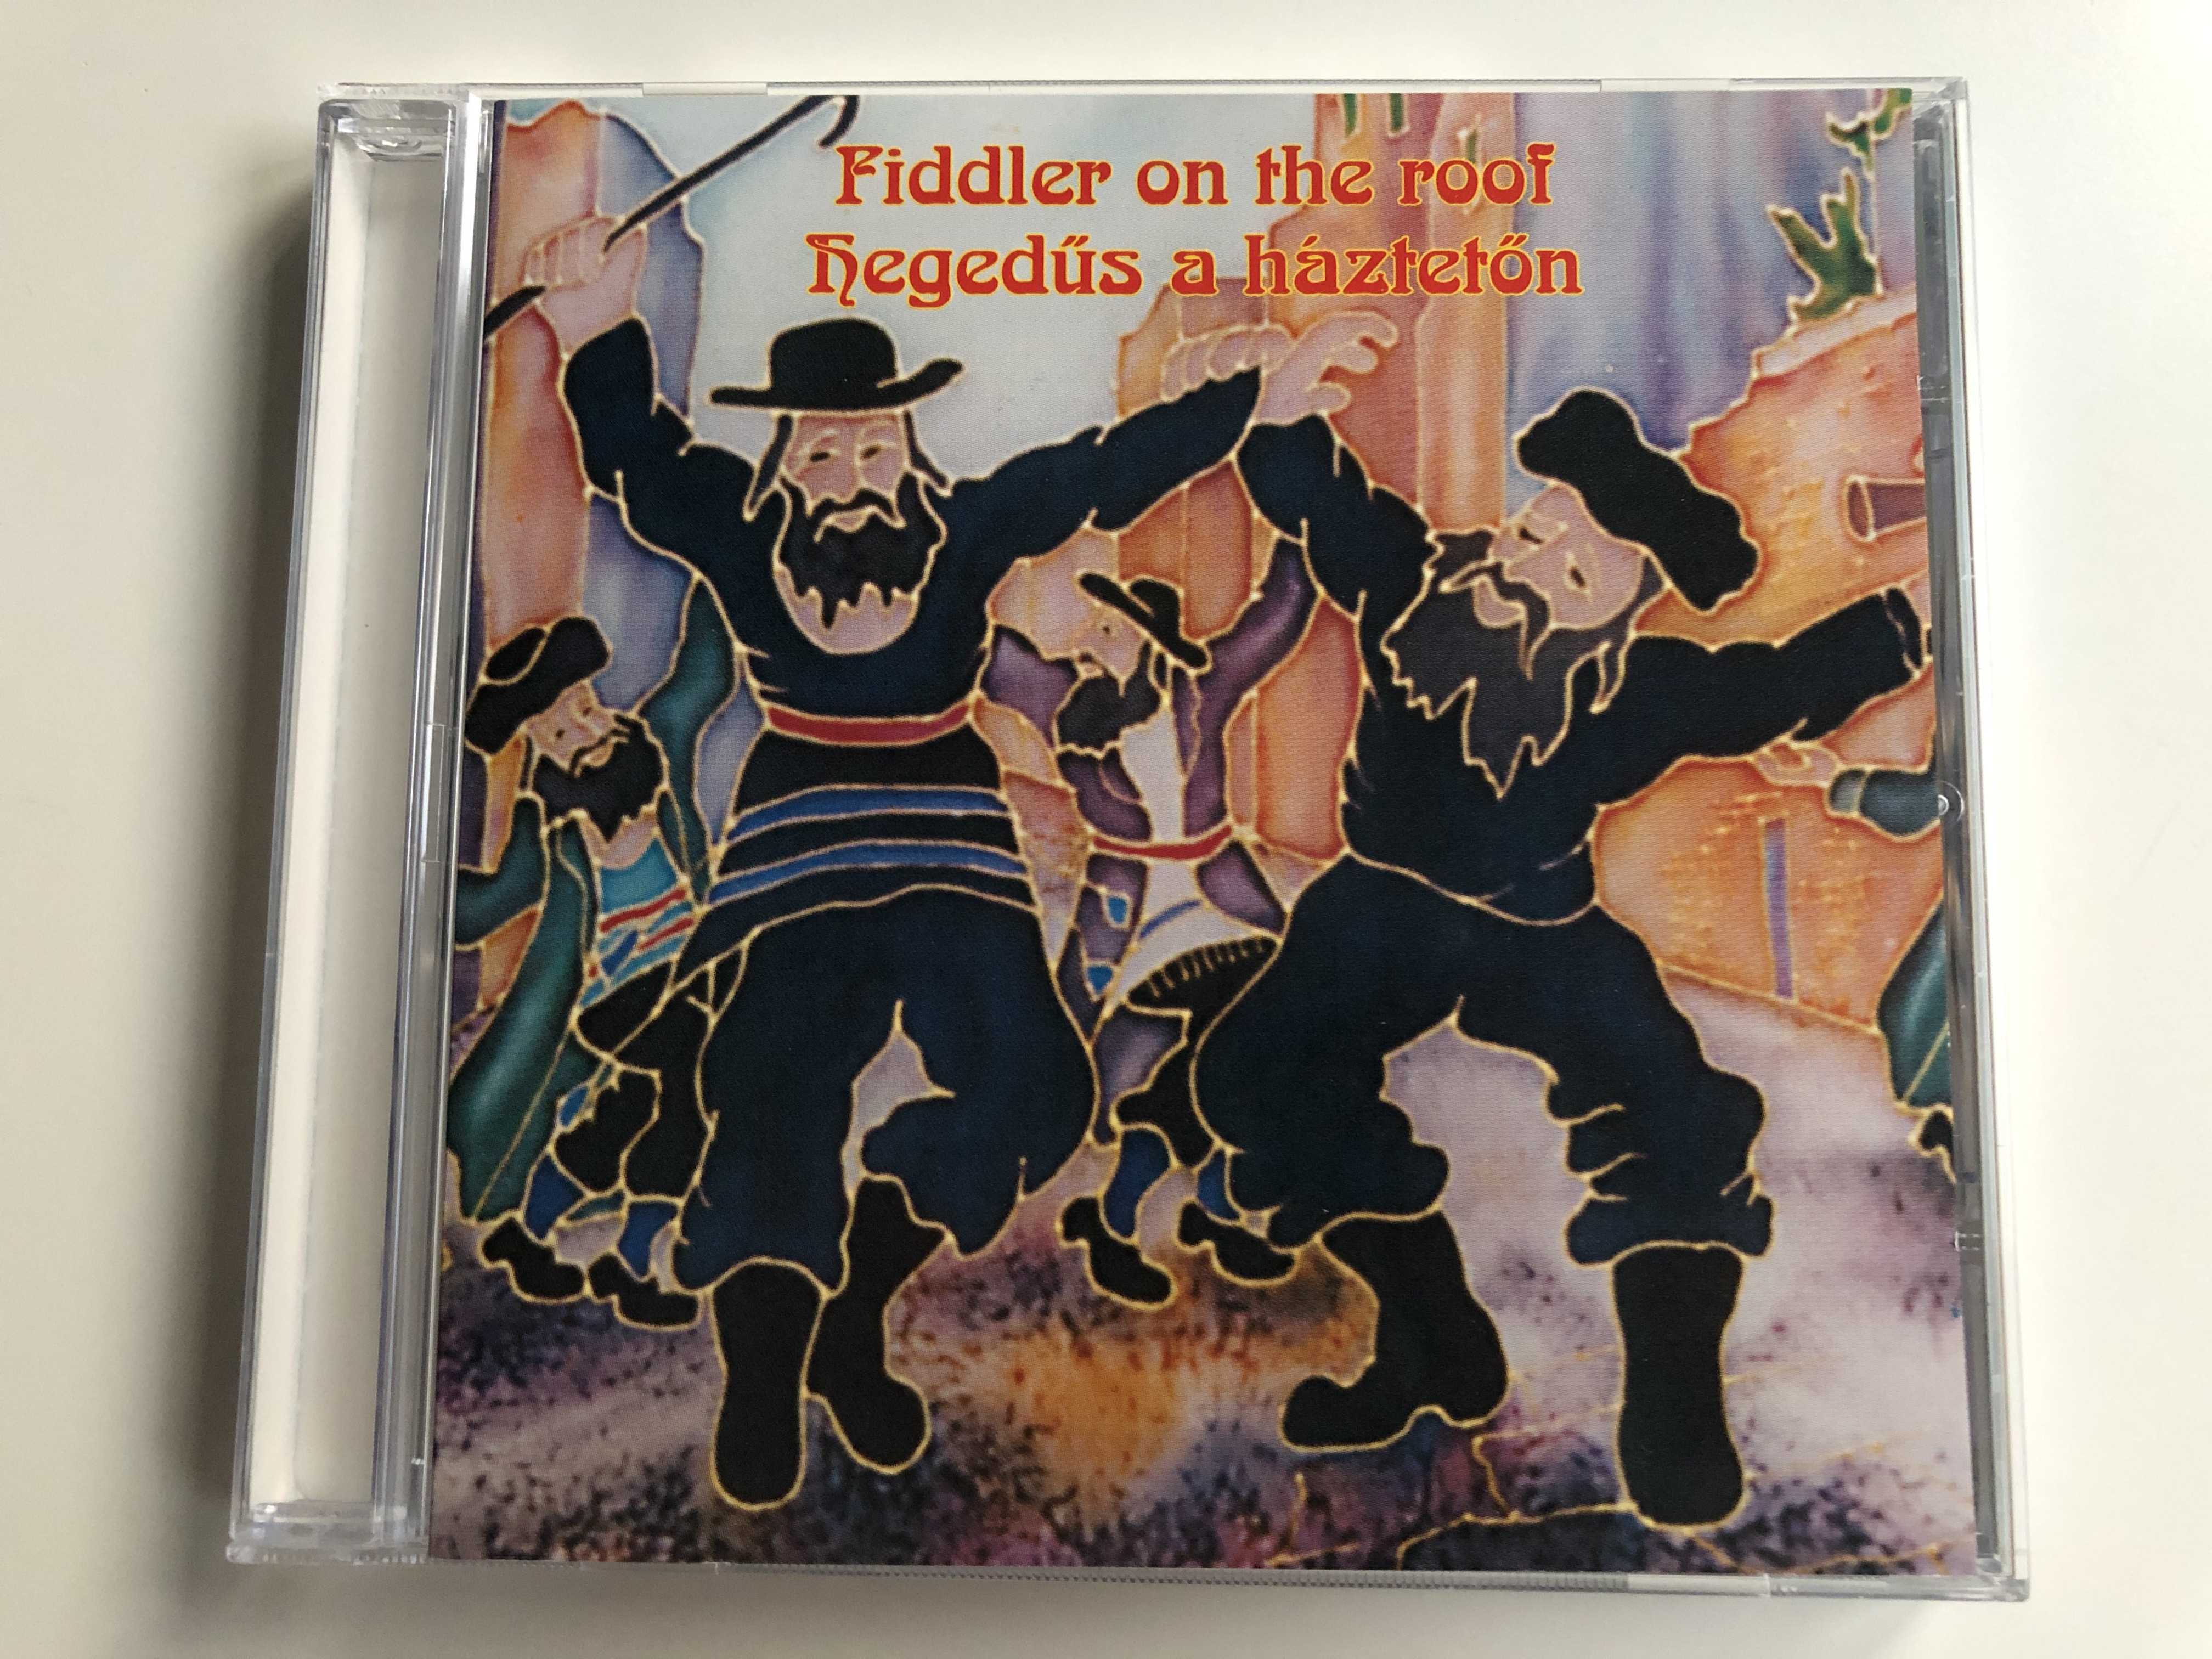 fiddler-on-the-roof-heged-s-a-h-ztet-n-ring-audio-cd-rcd-1121-1-.jpg